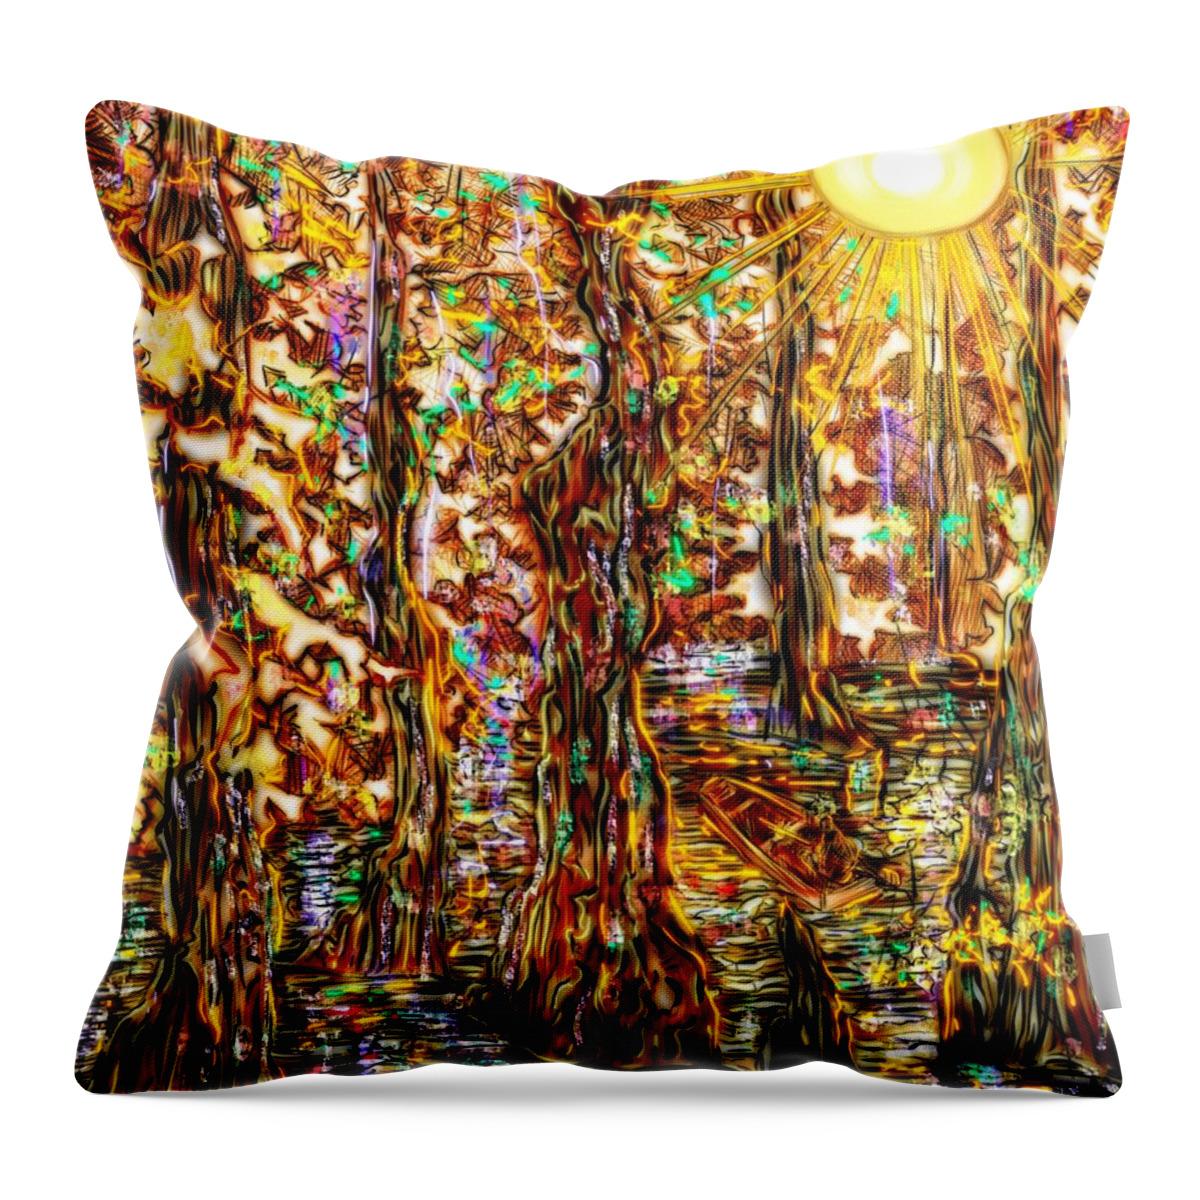 Louisiana Throw Pillow featuring the digital art Louisiana Sunrise by Angela Weddle